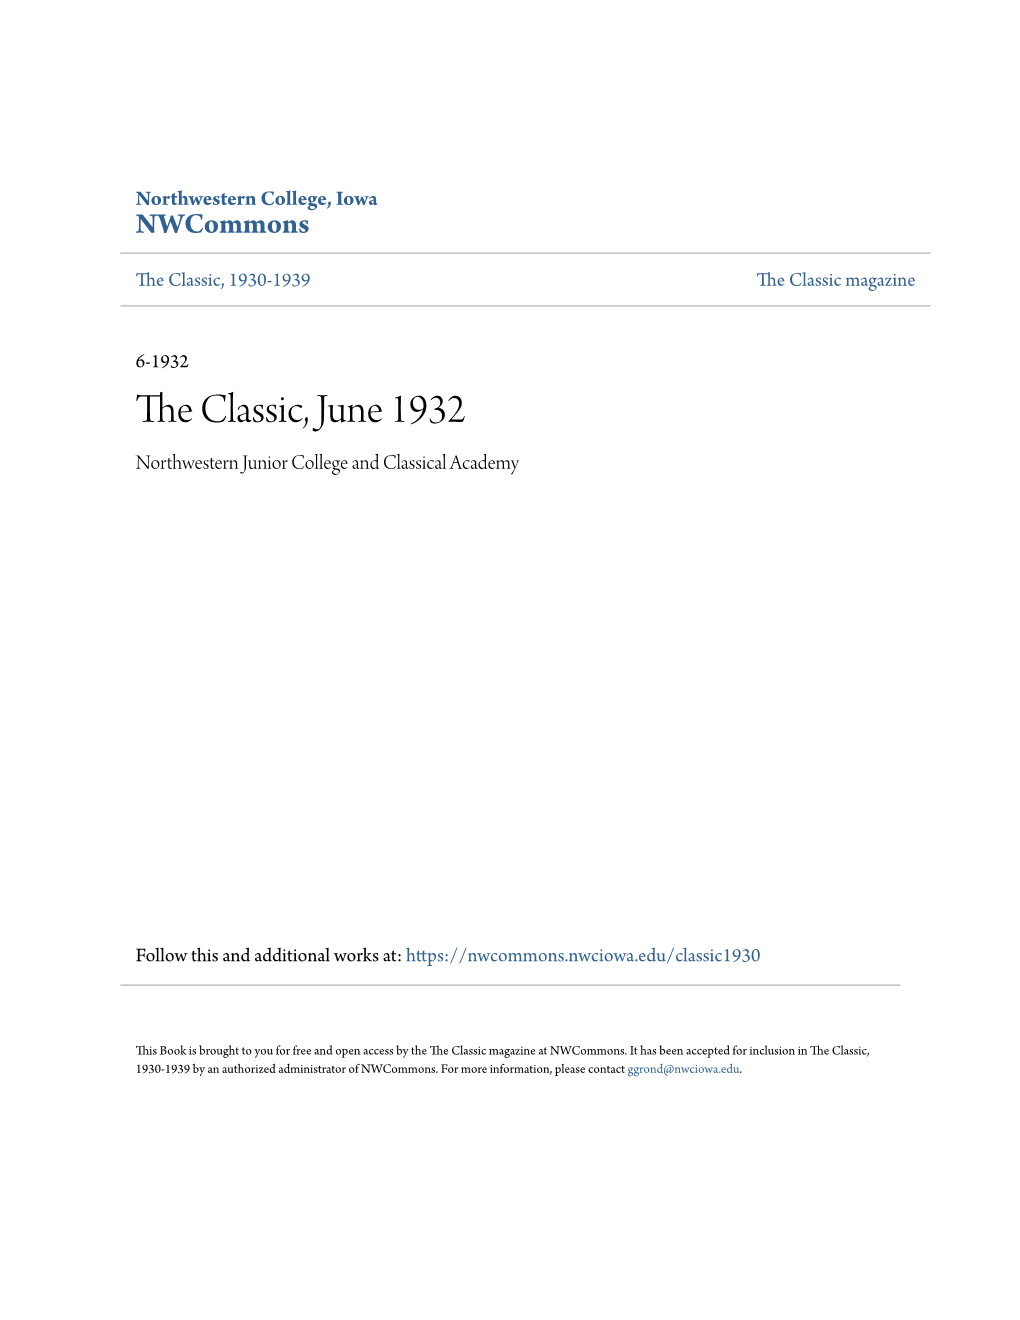 The Classic, June 1932